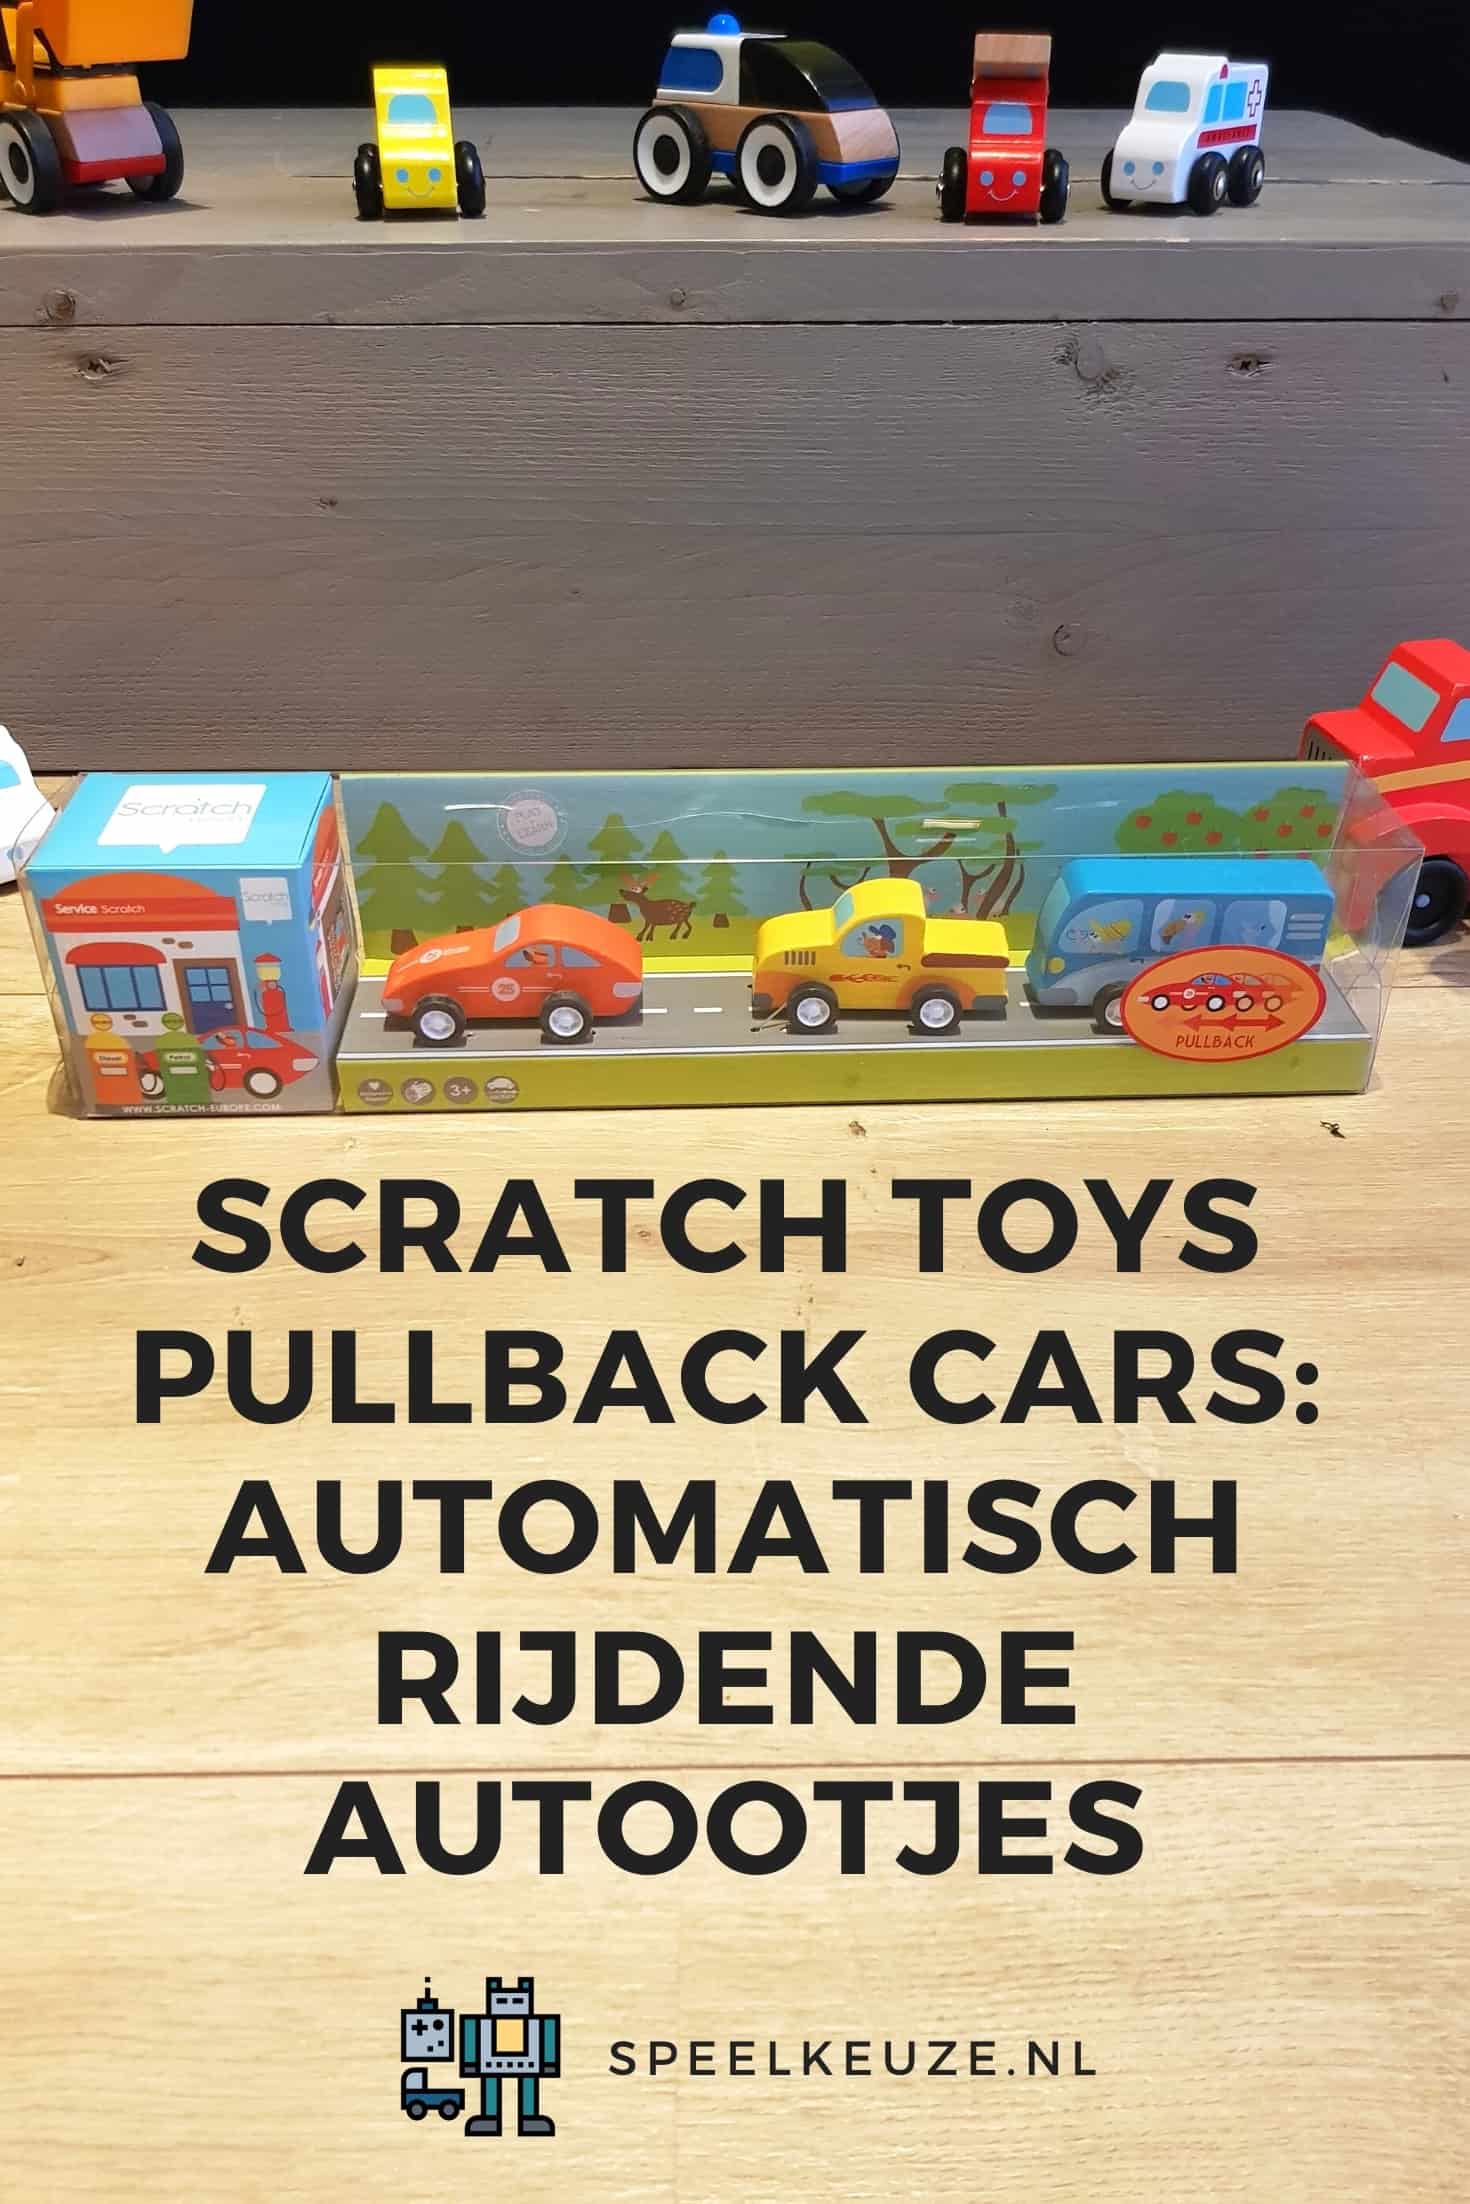 Scratch toys pullback cars: automatisch rijdende autootjes